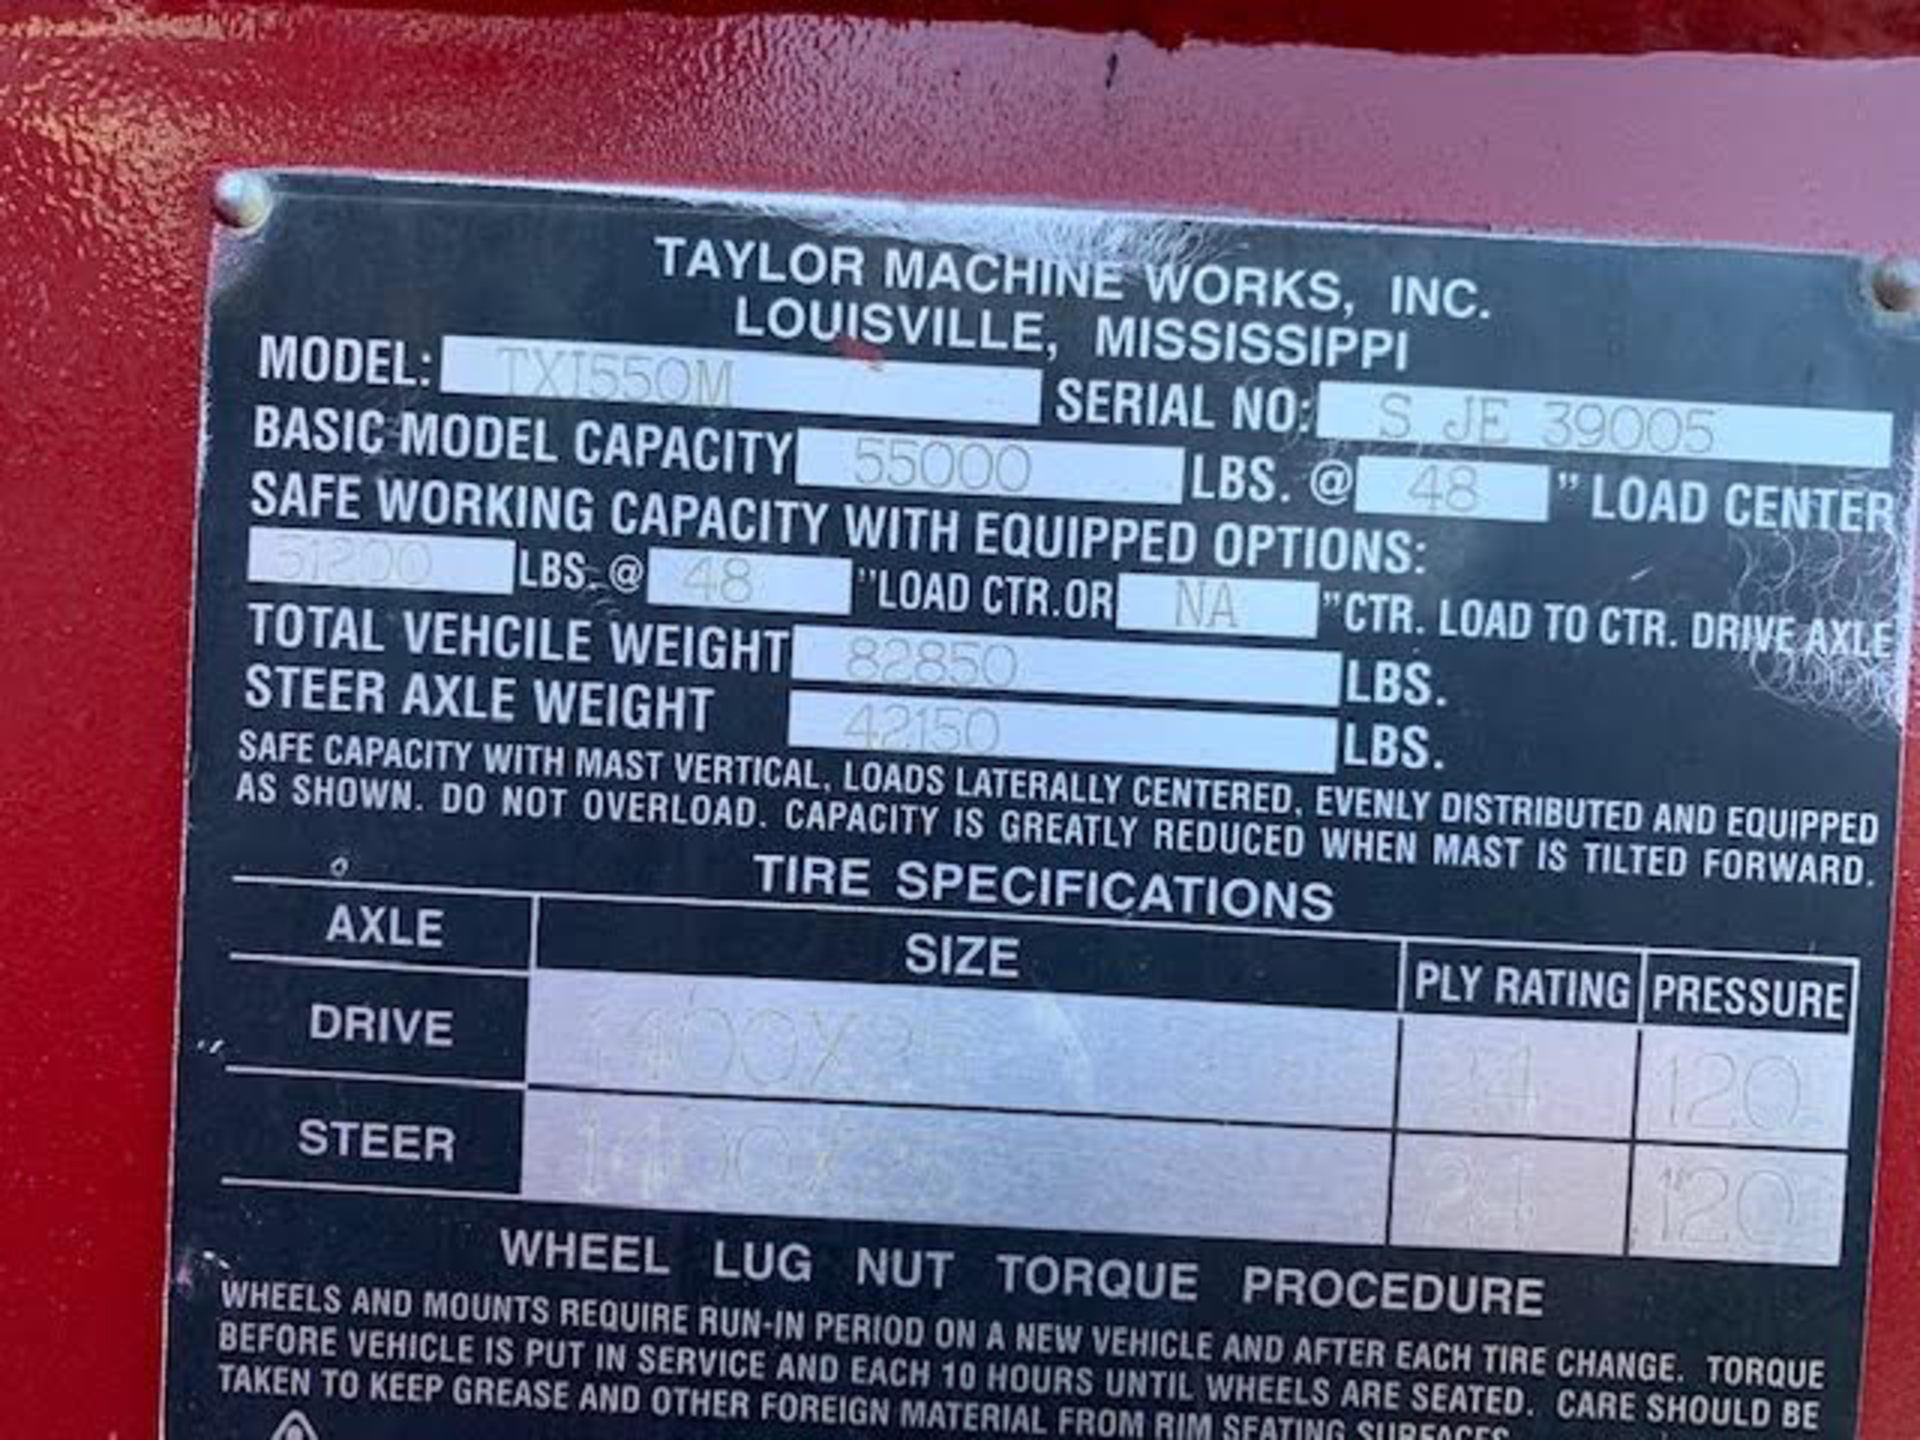 2014 Taylor TXI550 55,000lb Forklift - Image 4 of 4